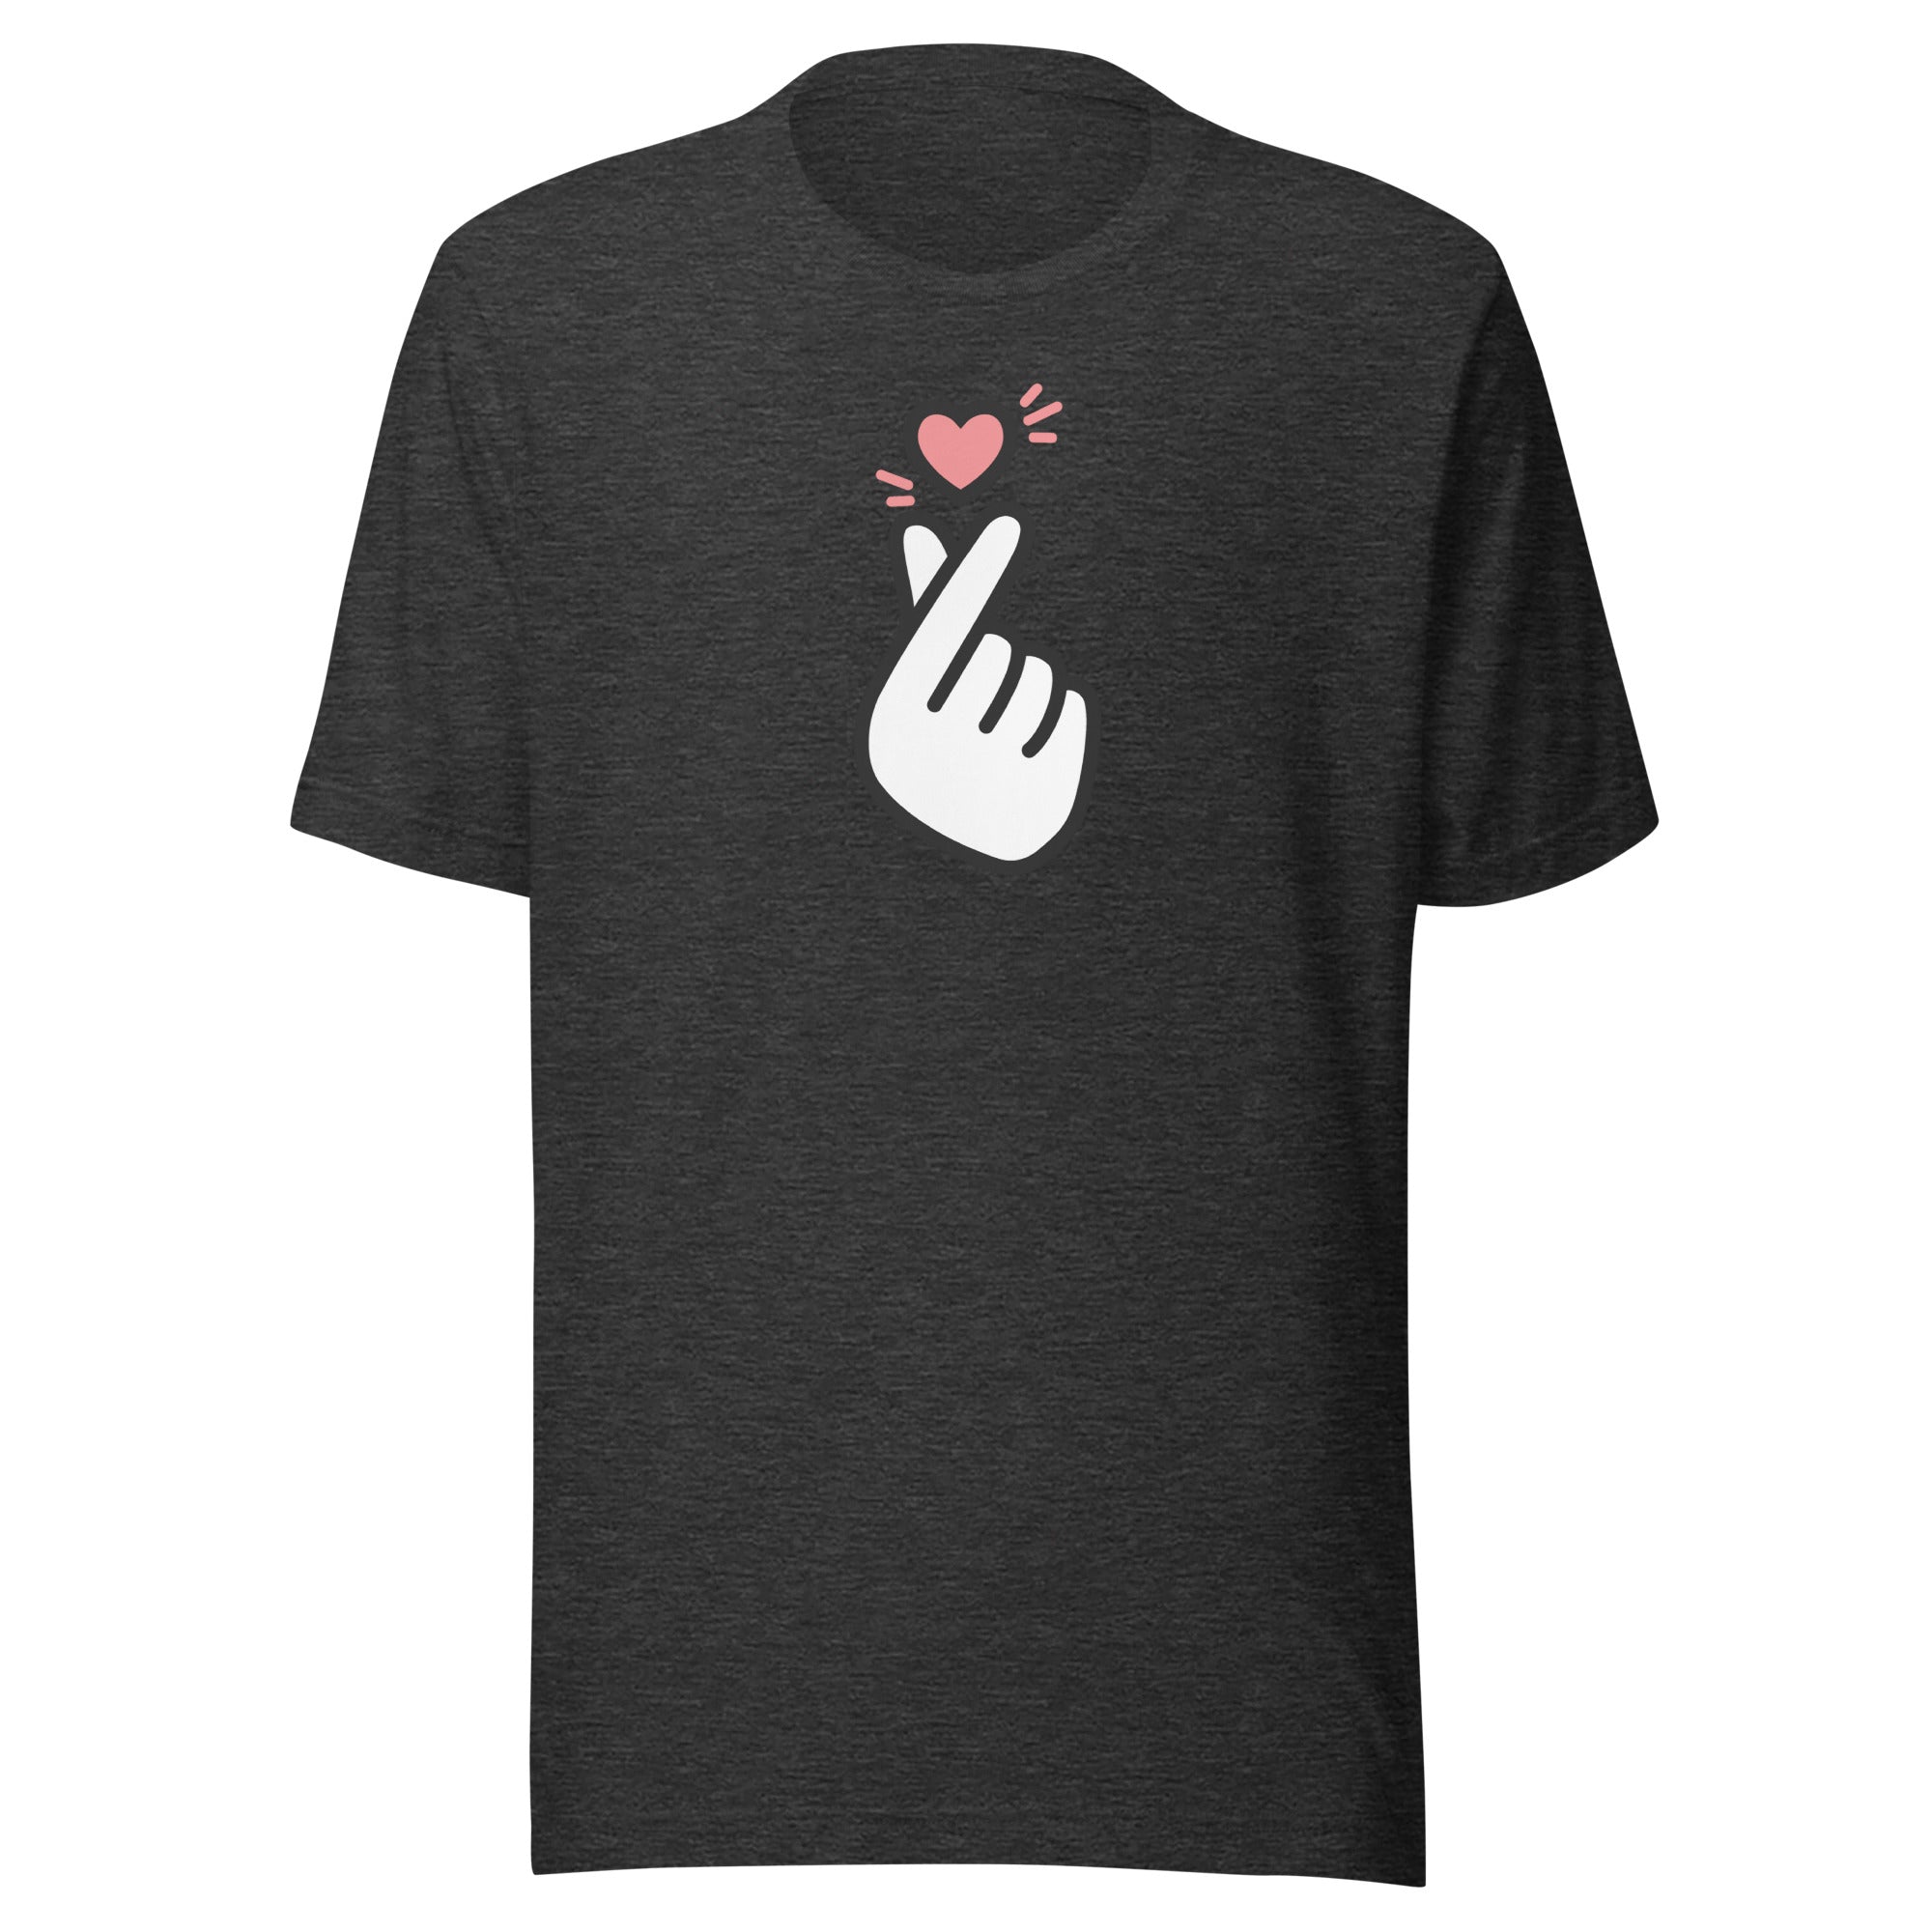 I Heart You Unisex t-shirt